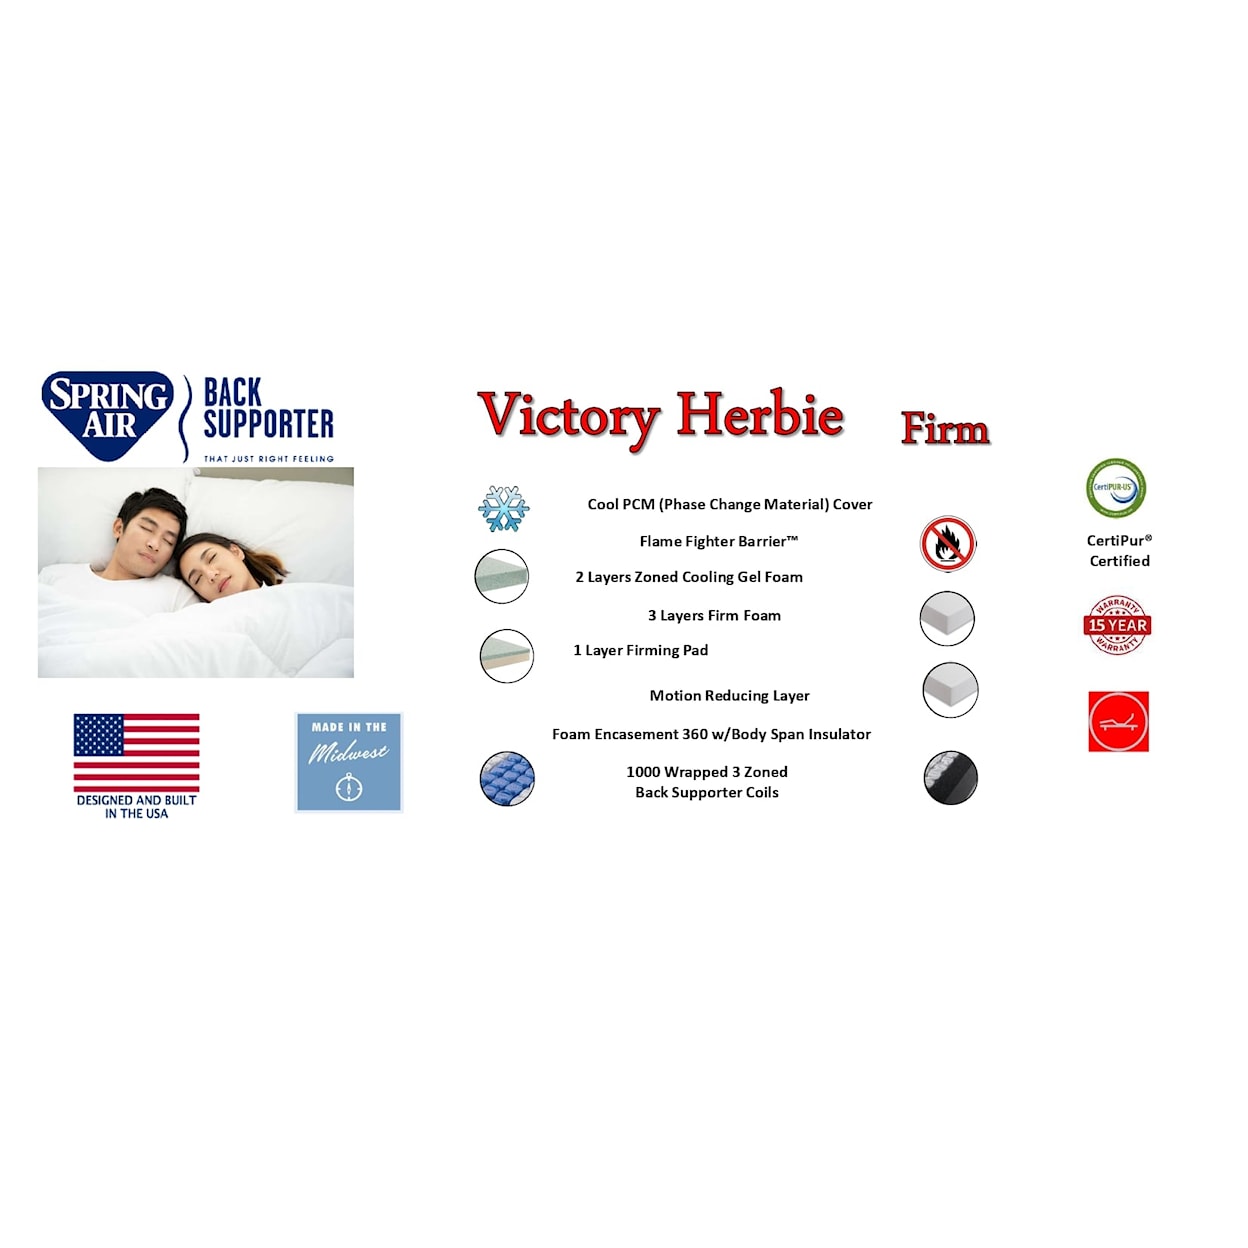 Spring Air Victory Herbie Firm VICTORY HERBIE FIRM FULL MATTRESS | .